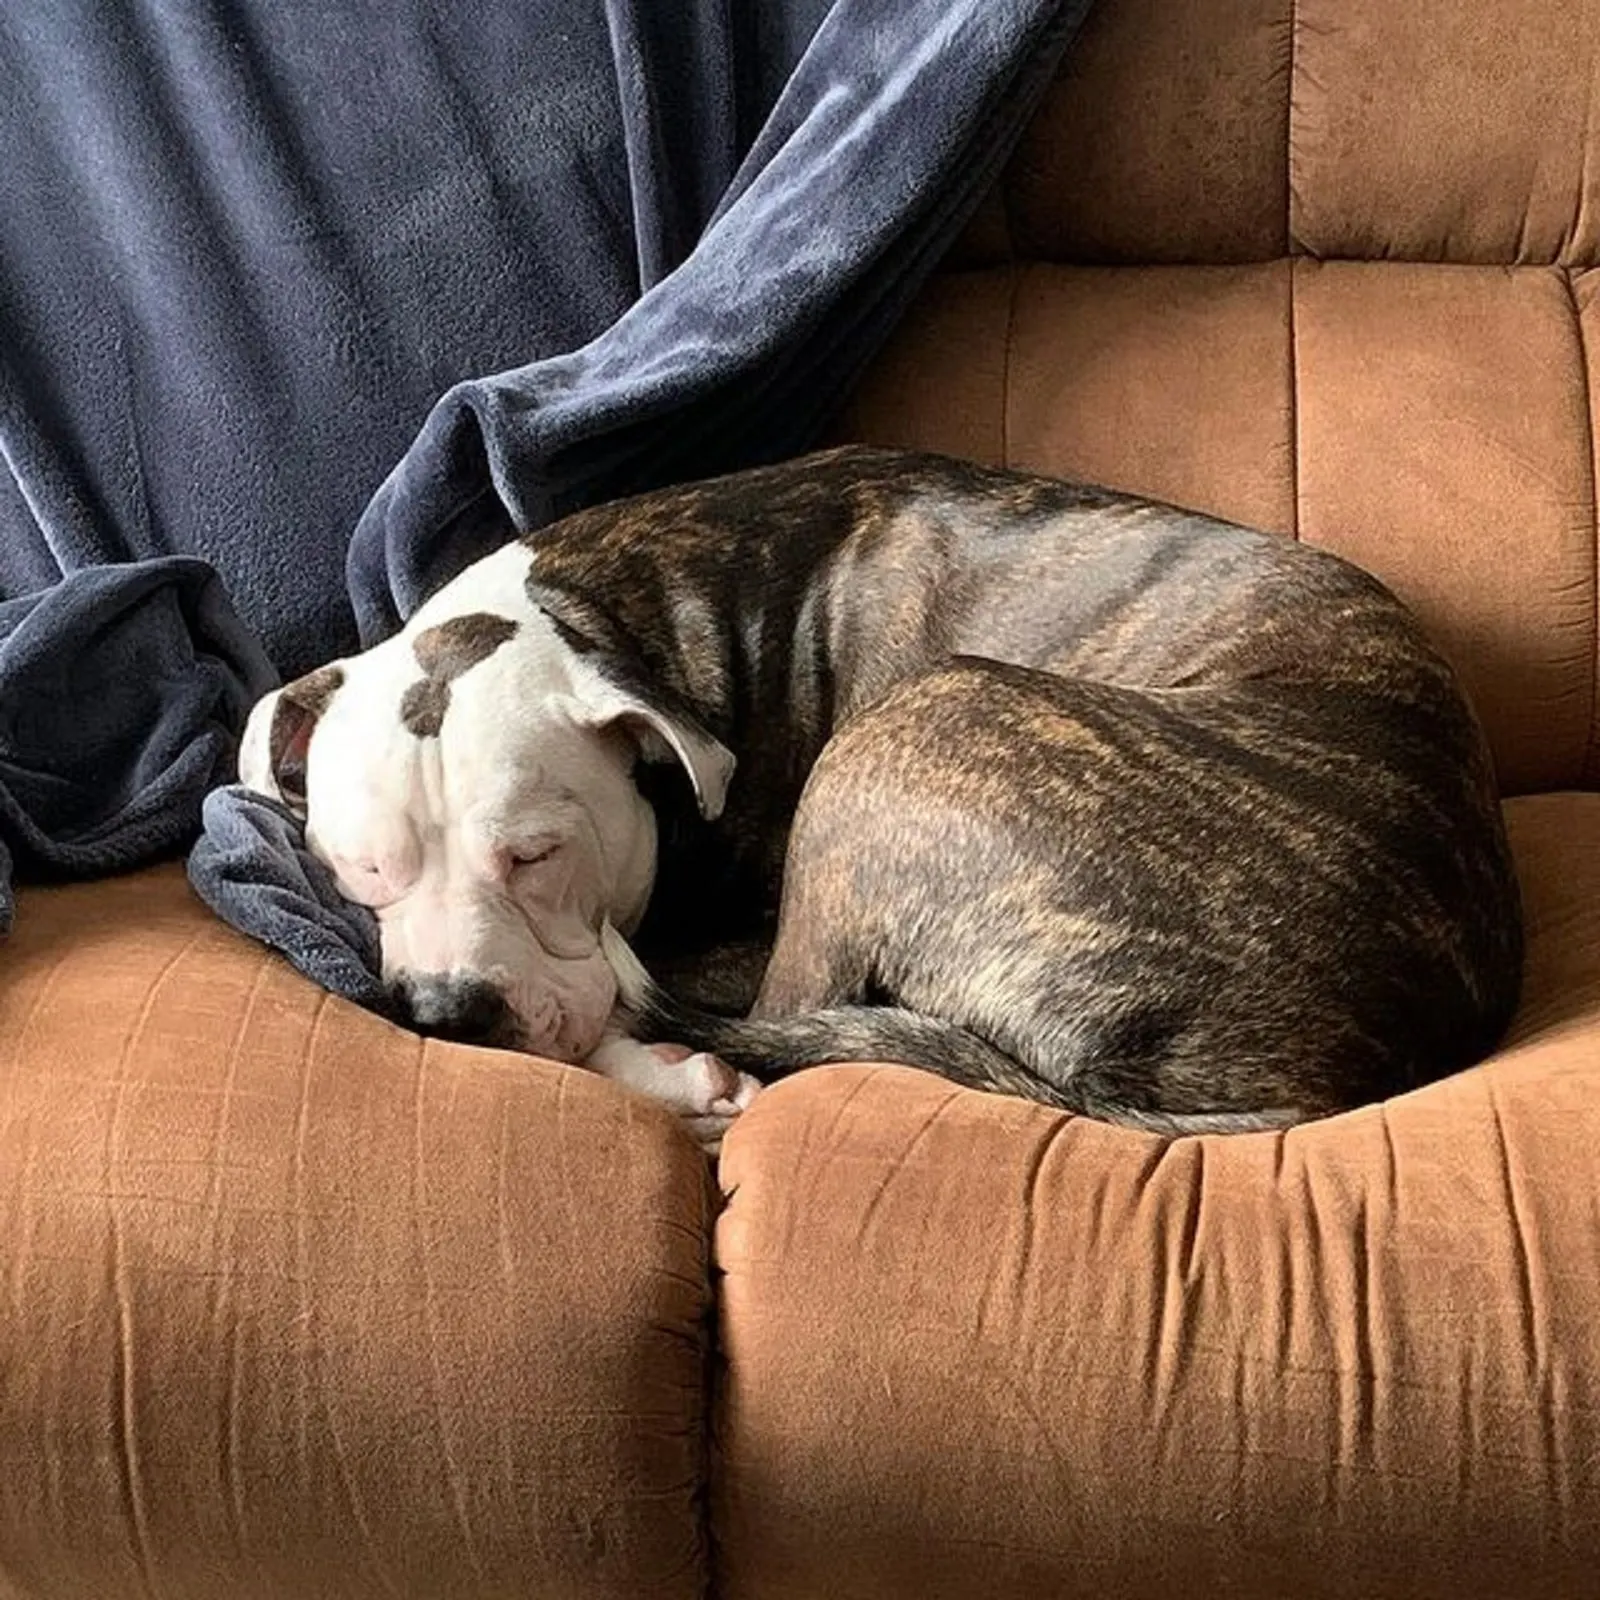 cane corso american bulldog sleeping on the couch